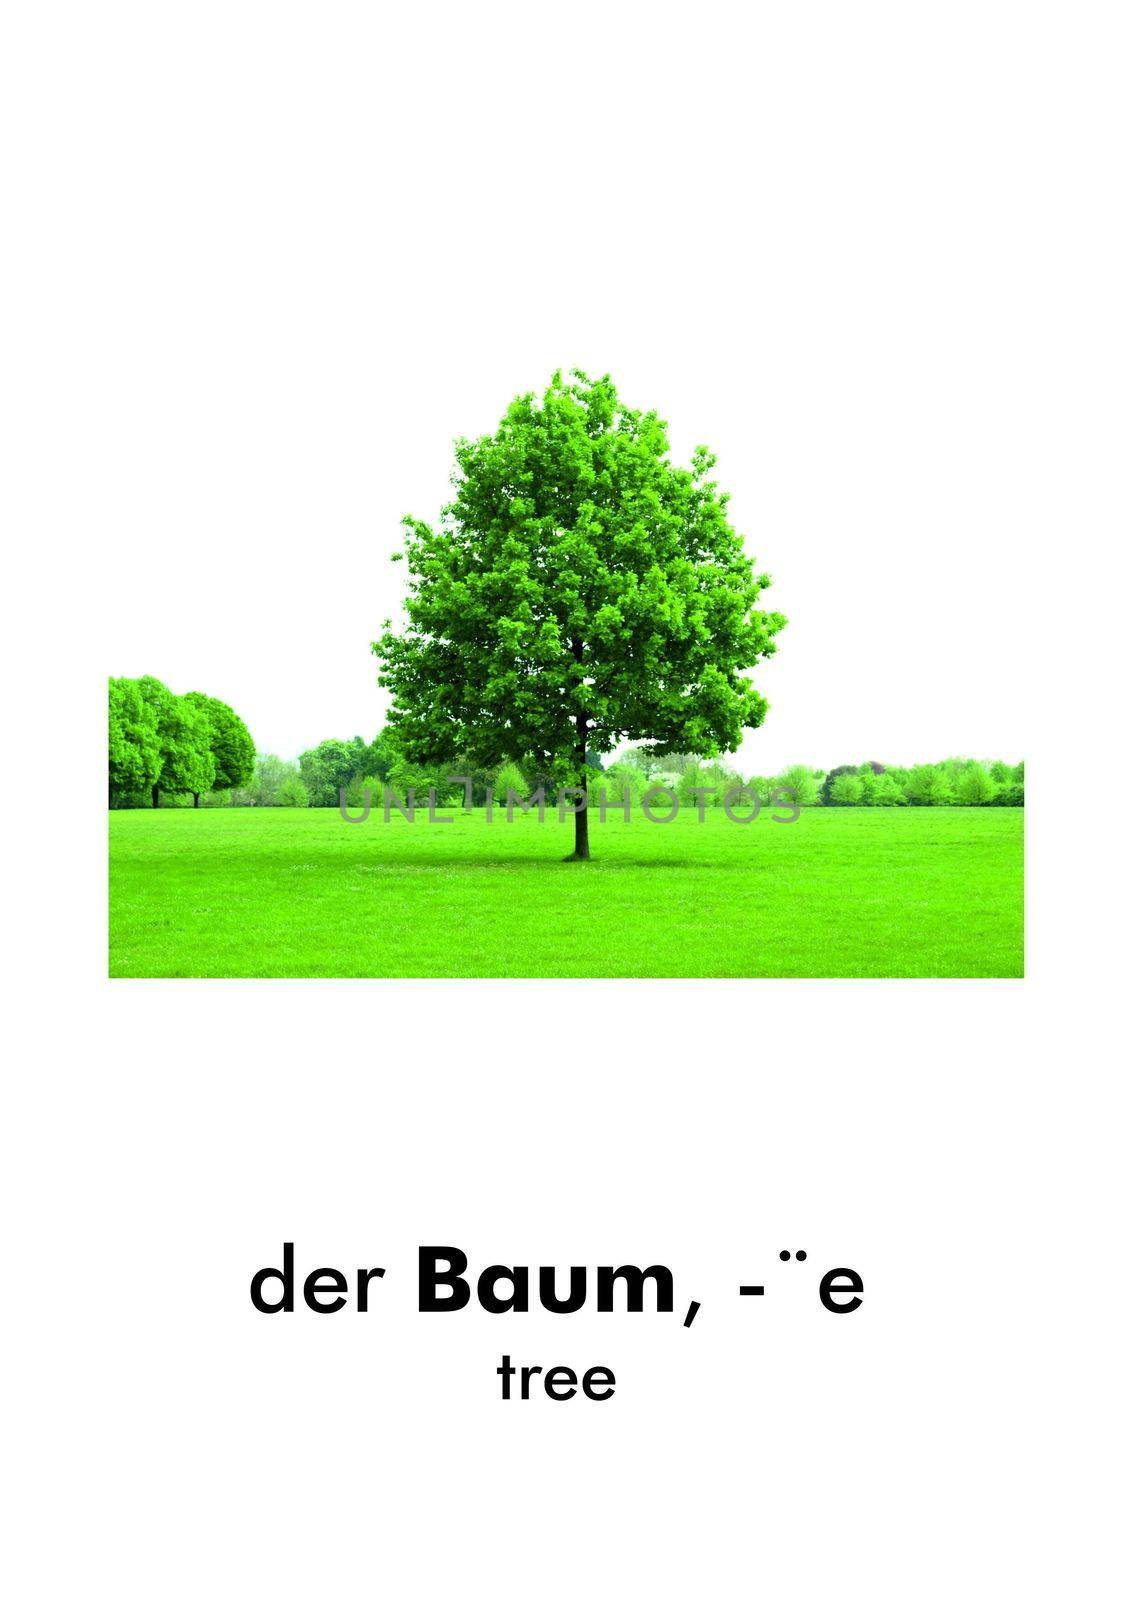 German word card: der Baum (tree)